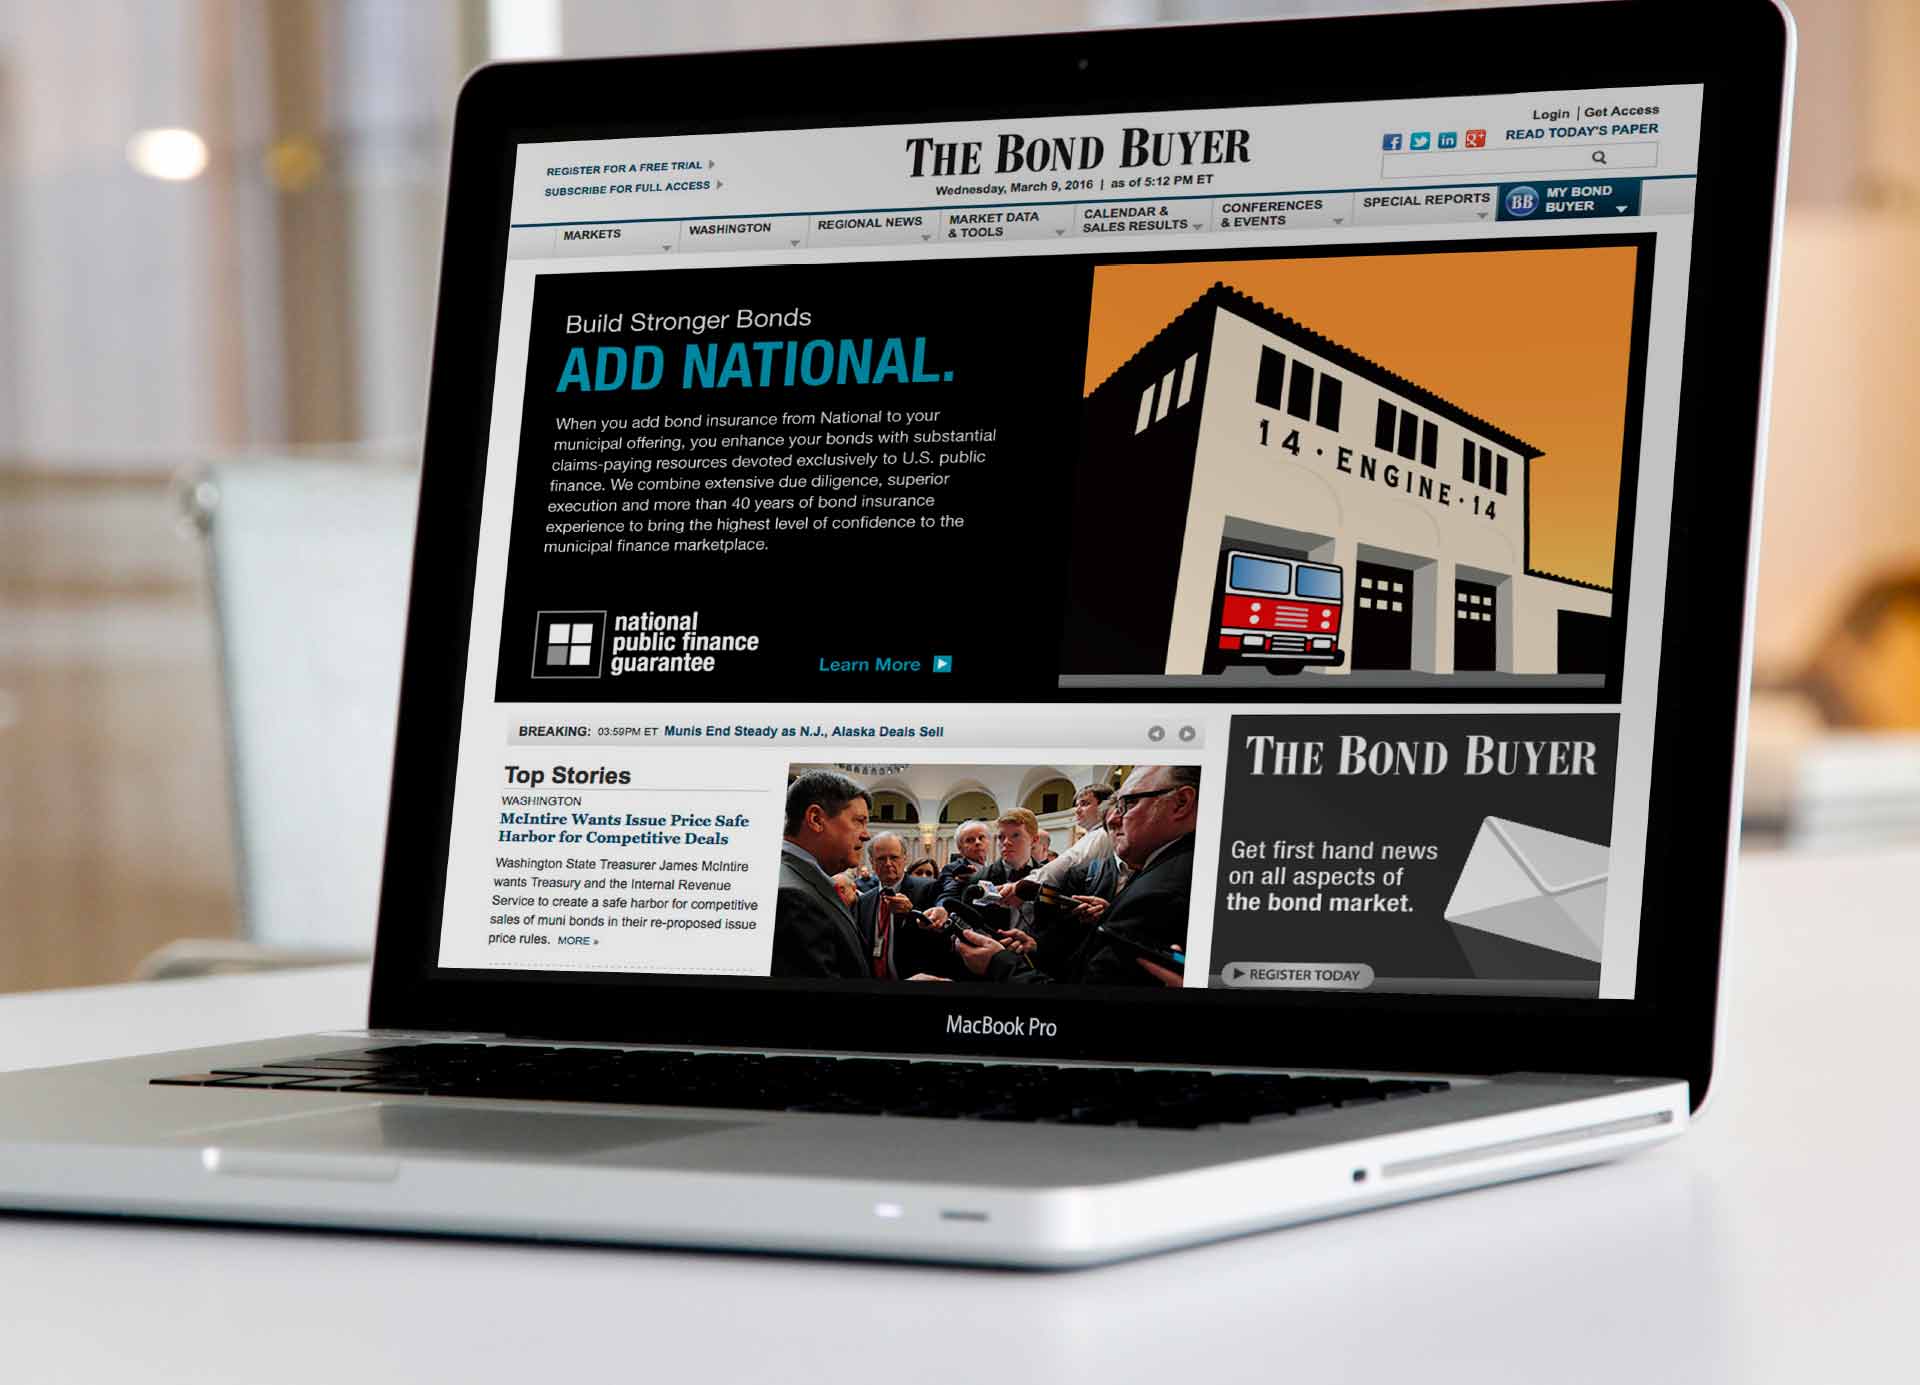 The Bond Buyer webpage on laptop